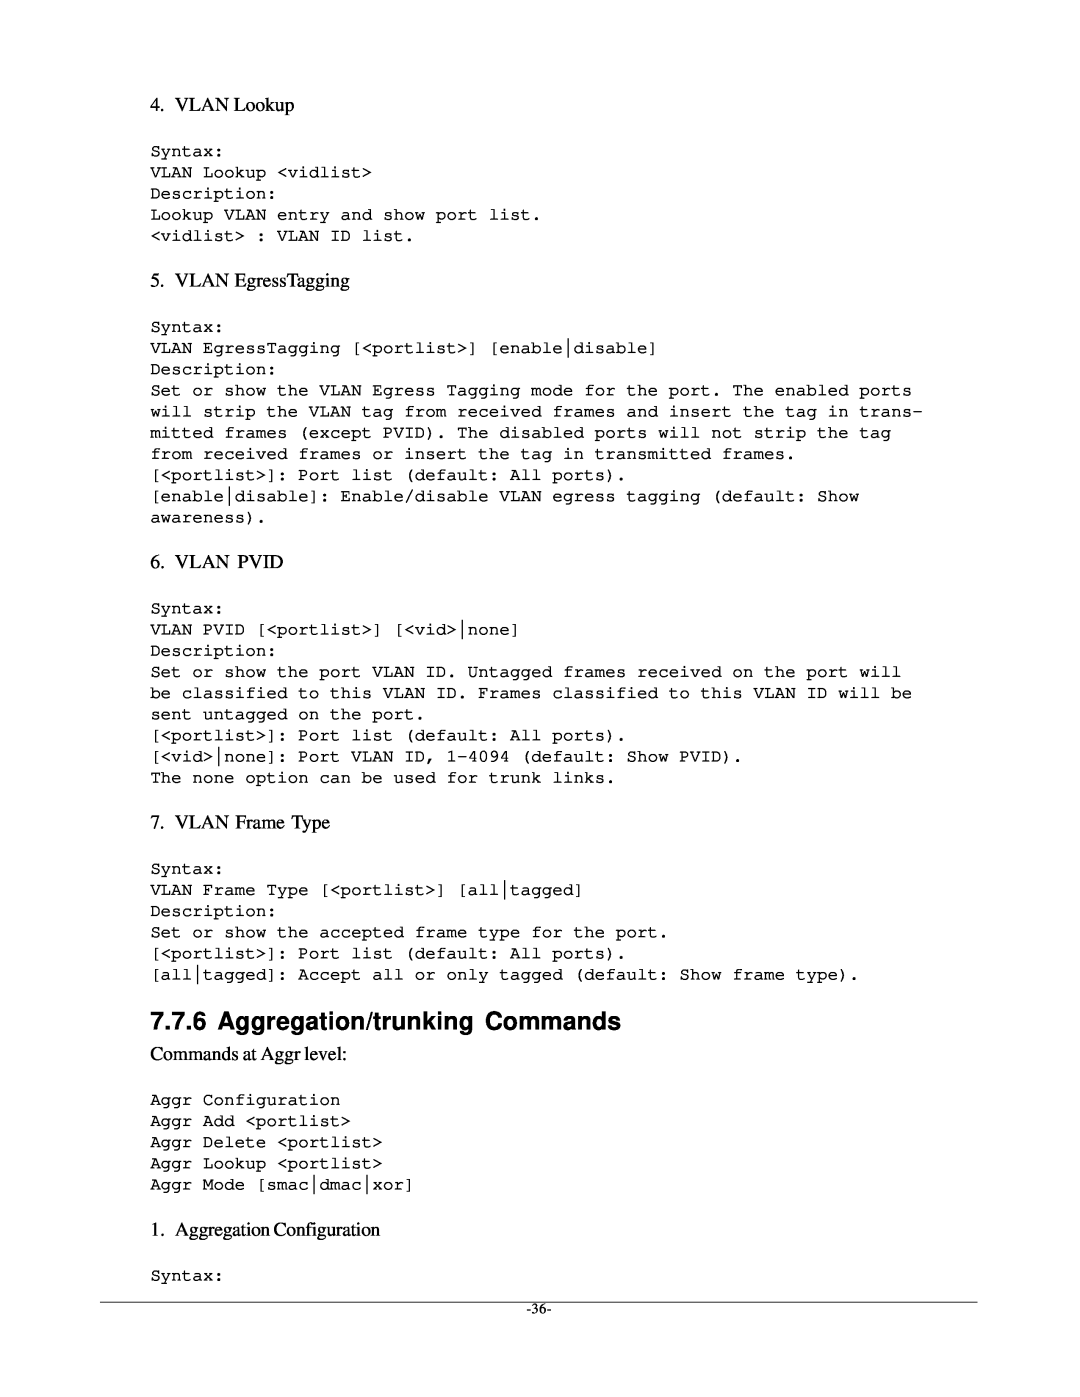 KTI Networks kgs-1601 manual Aggregation/trunking Commands, VLAN Lookup, VLAN EgressTagging, Vlan Pvid, VLAN Frame Type 